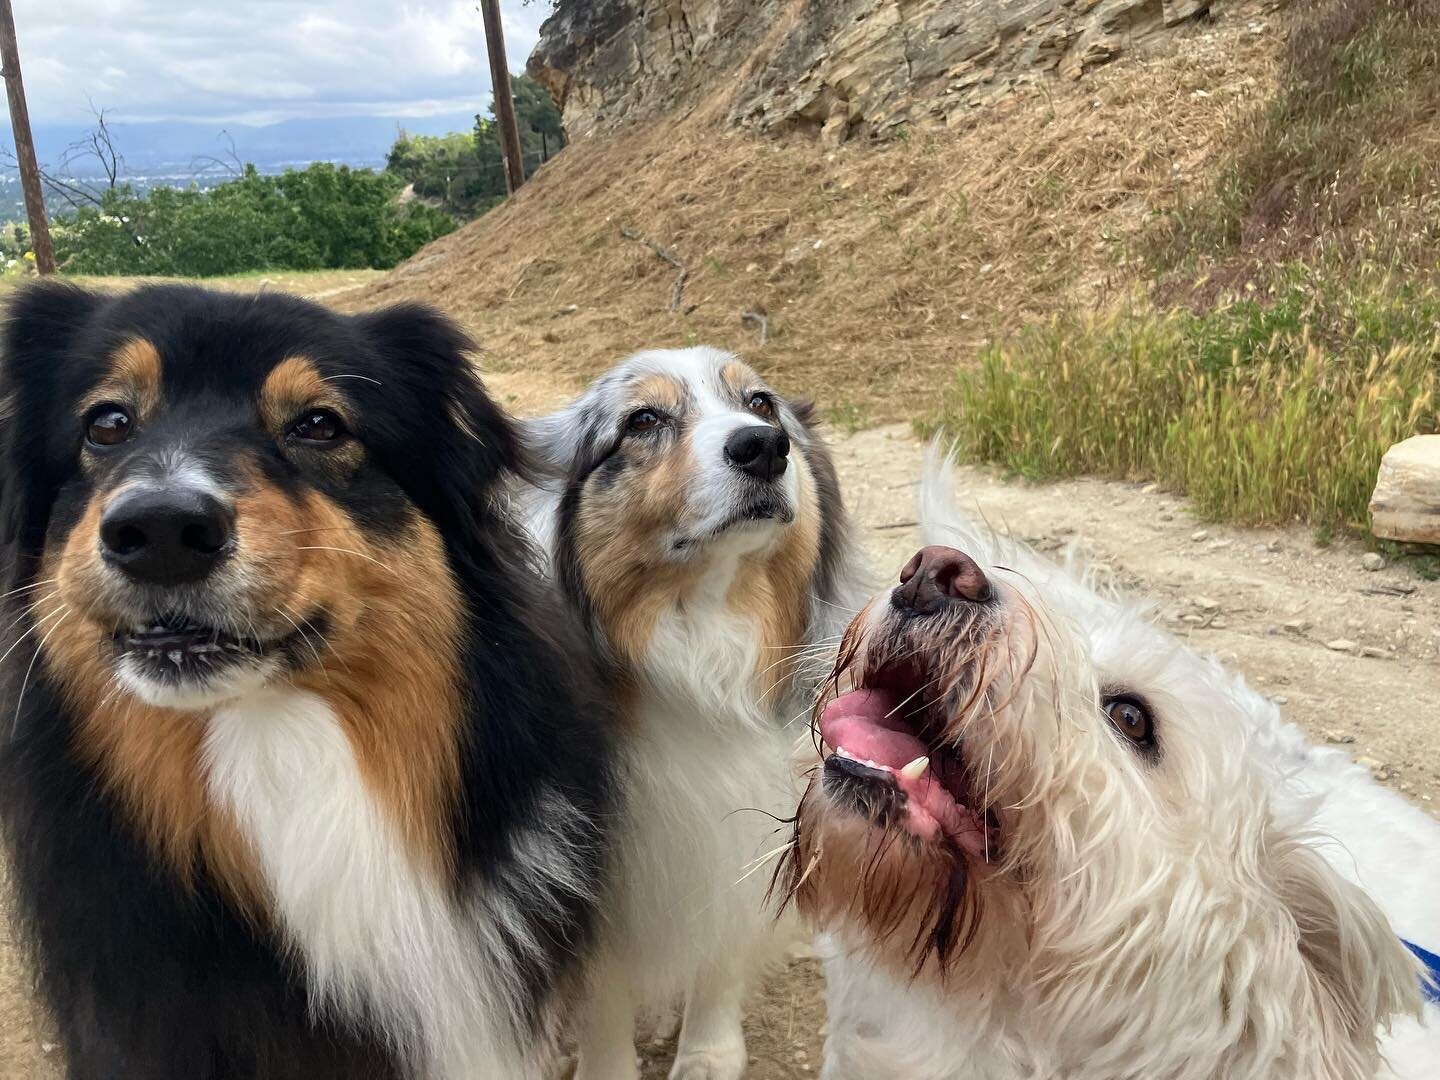 Loving our morning hikes with these three. ☺️ 

#happydogs #happydoghappylife #happydogsclub
#happydogshappylife #dogoftheday
#dobermanpride #doberman #bigdog
#bigdogsofinstagram #dobermaninstagram
#petsitter #petlover #doglife #doglover